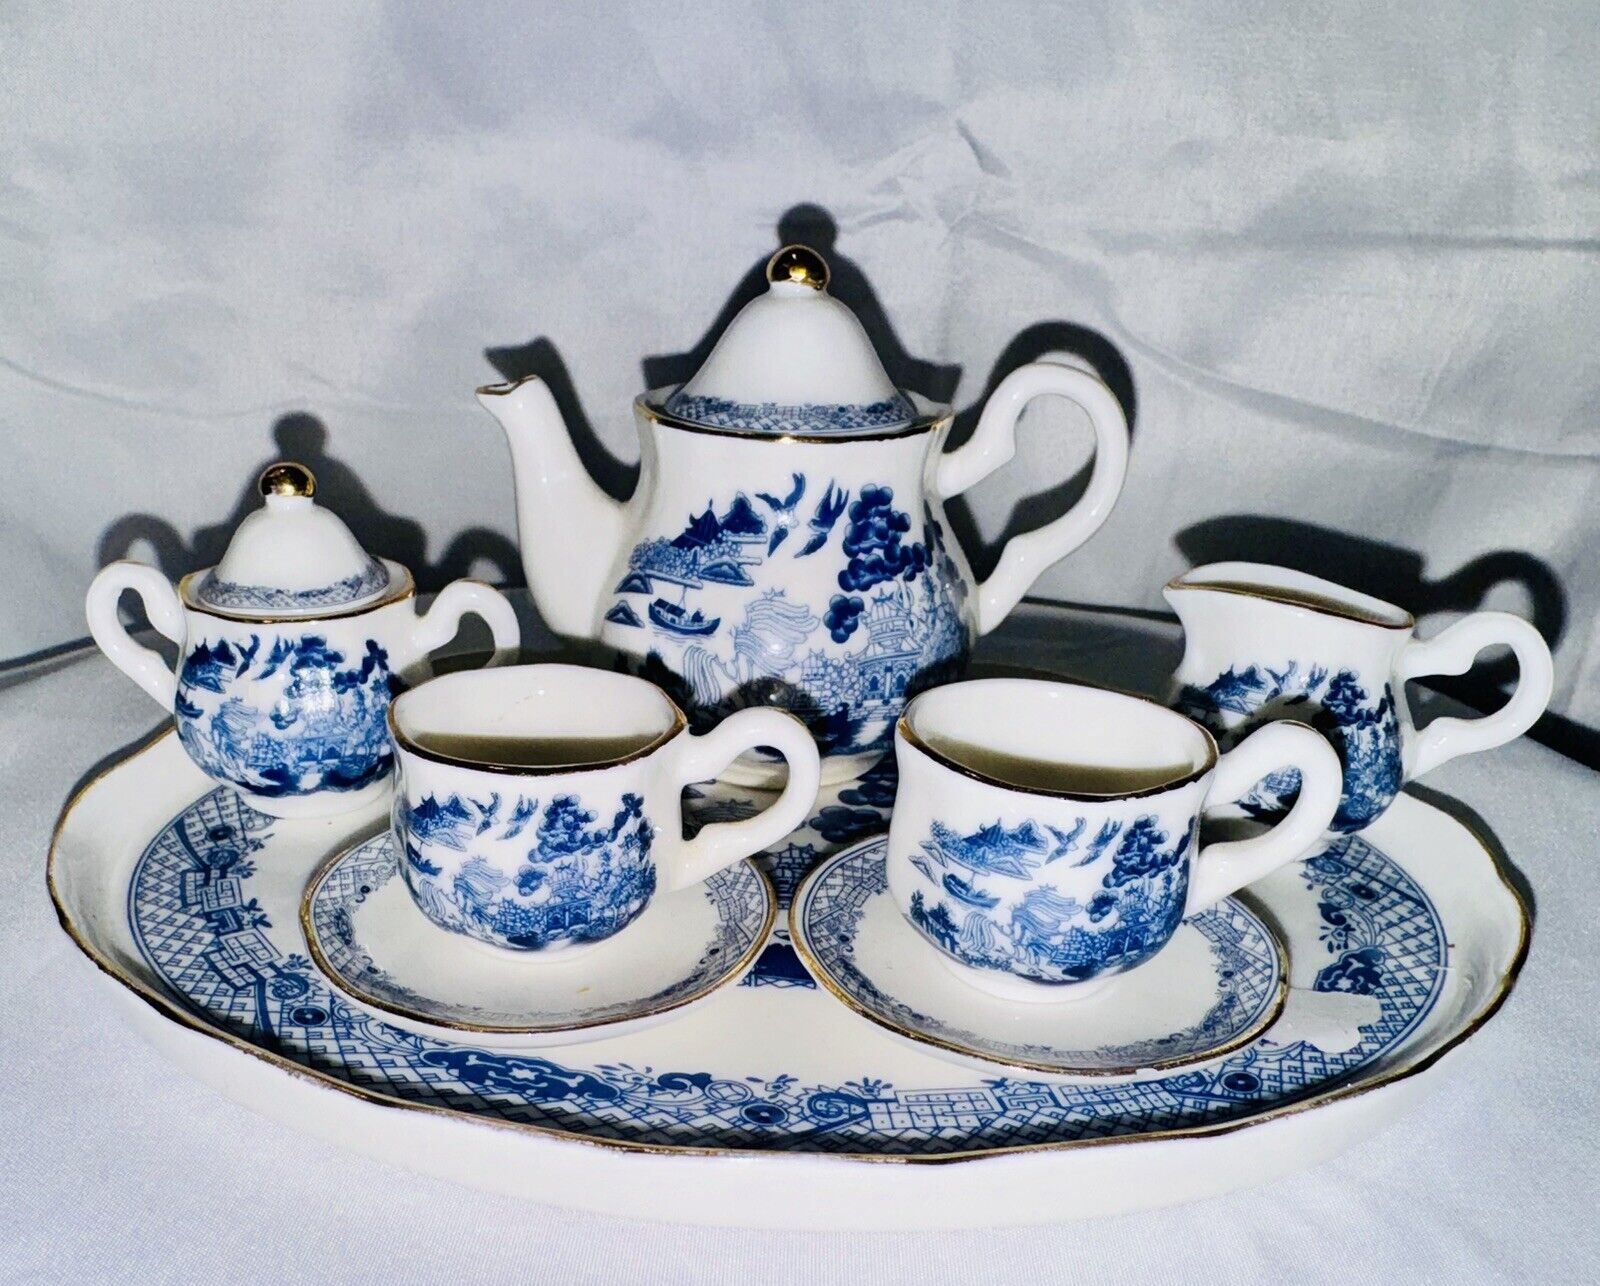 Regal Bone China Miniature Tea Set - 8 Pieces Traditional Blue and White Style